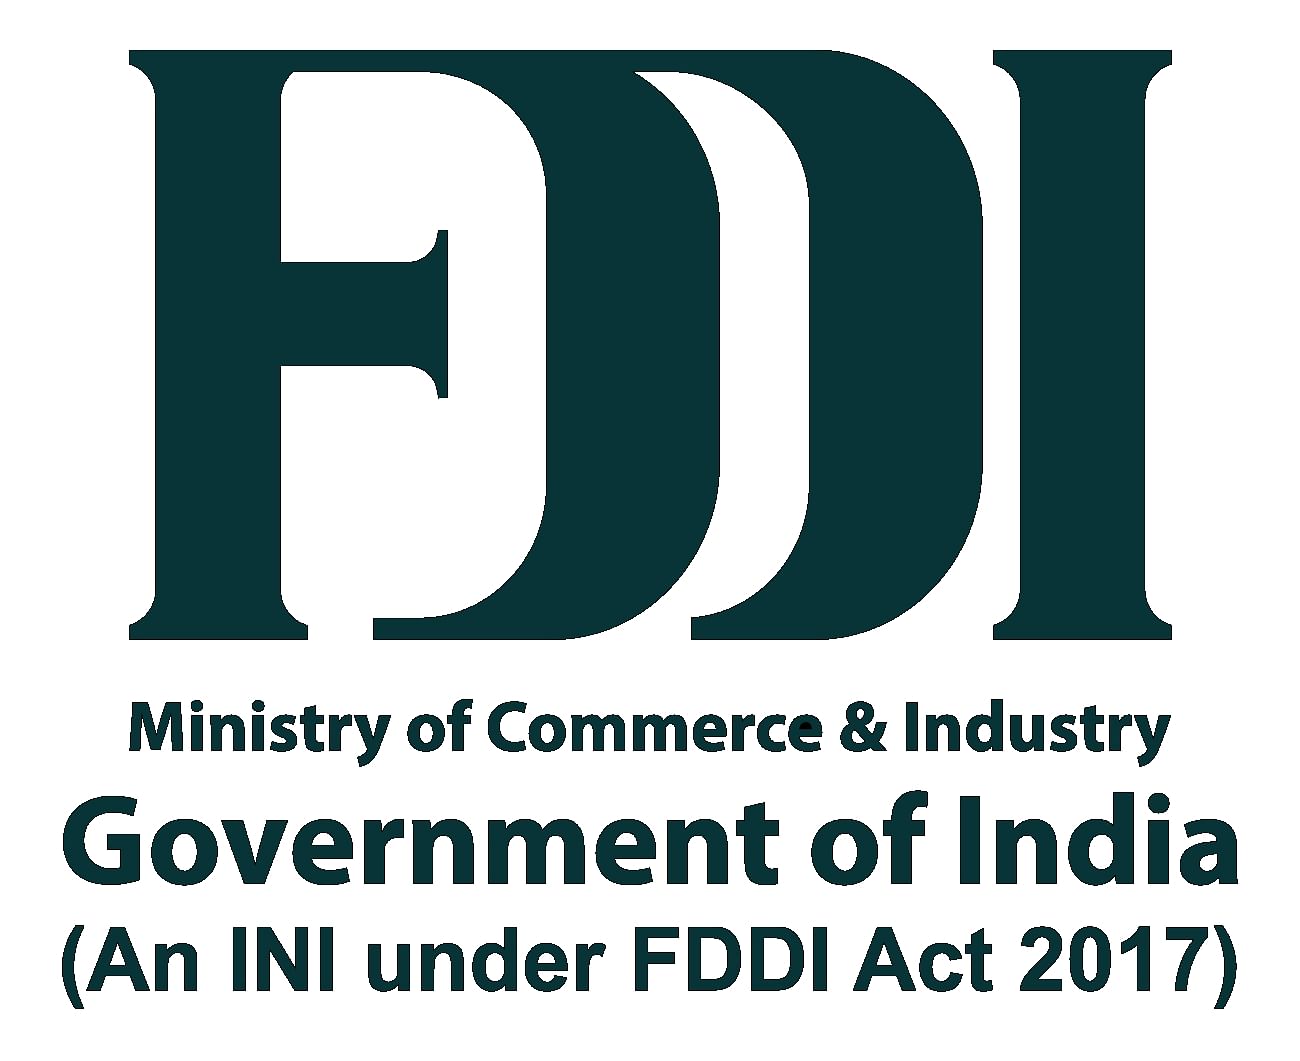 FDDI AIST 2020 Examination Cancelled, Admission to UG, PG Programme on Merit Basis